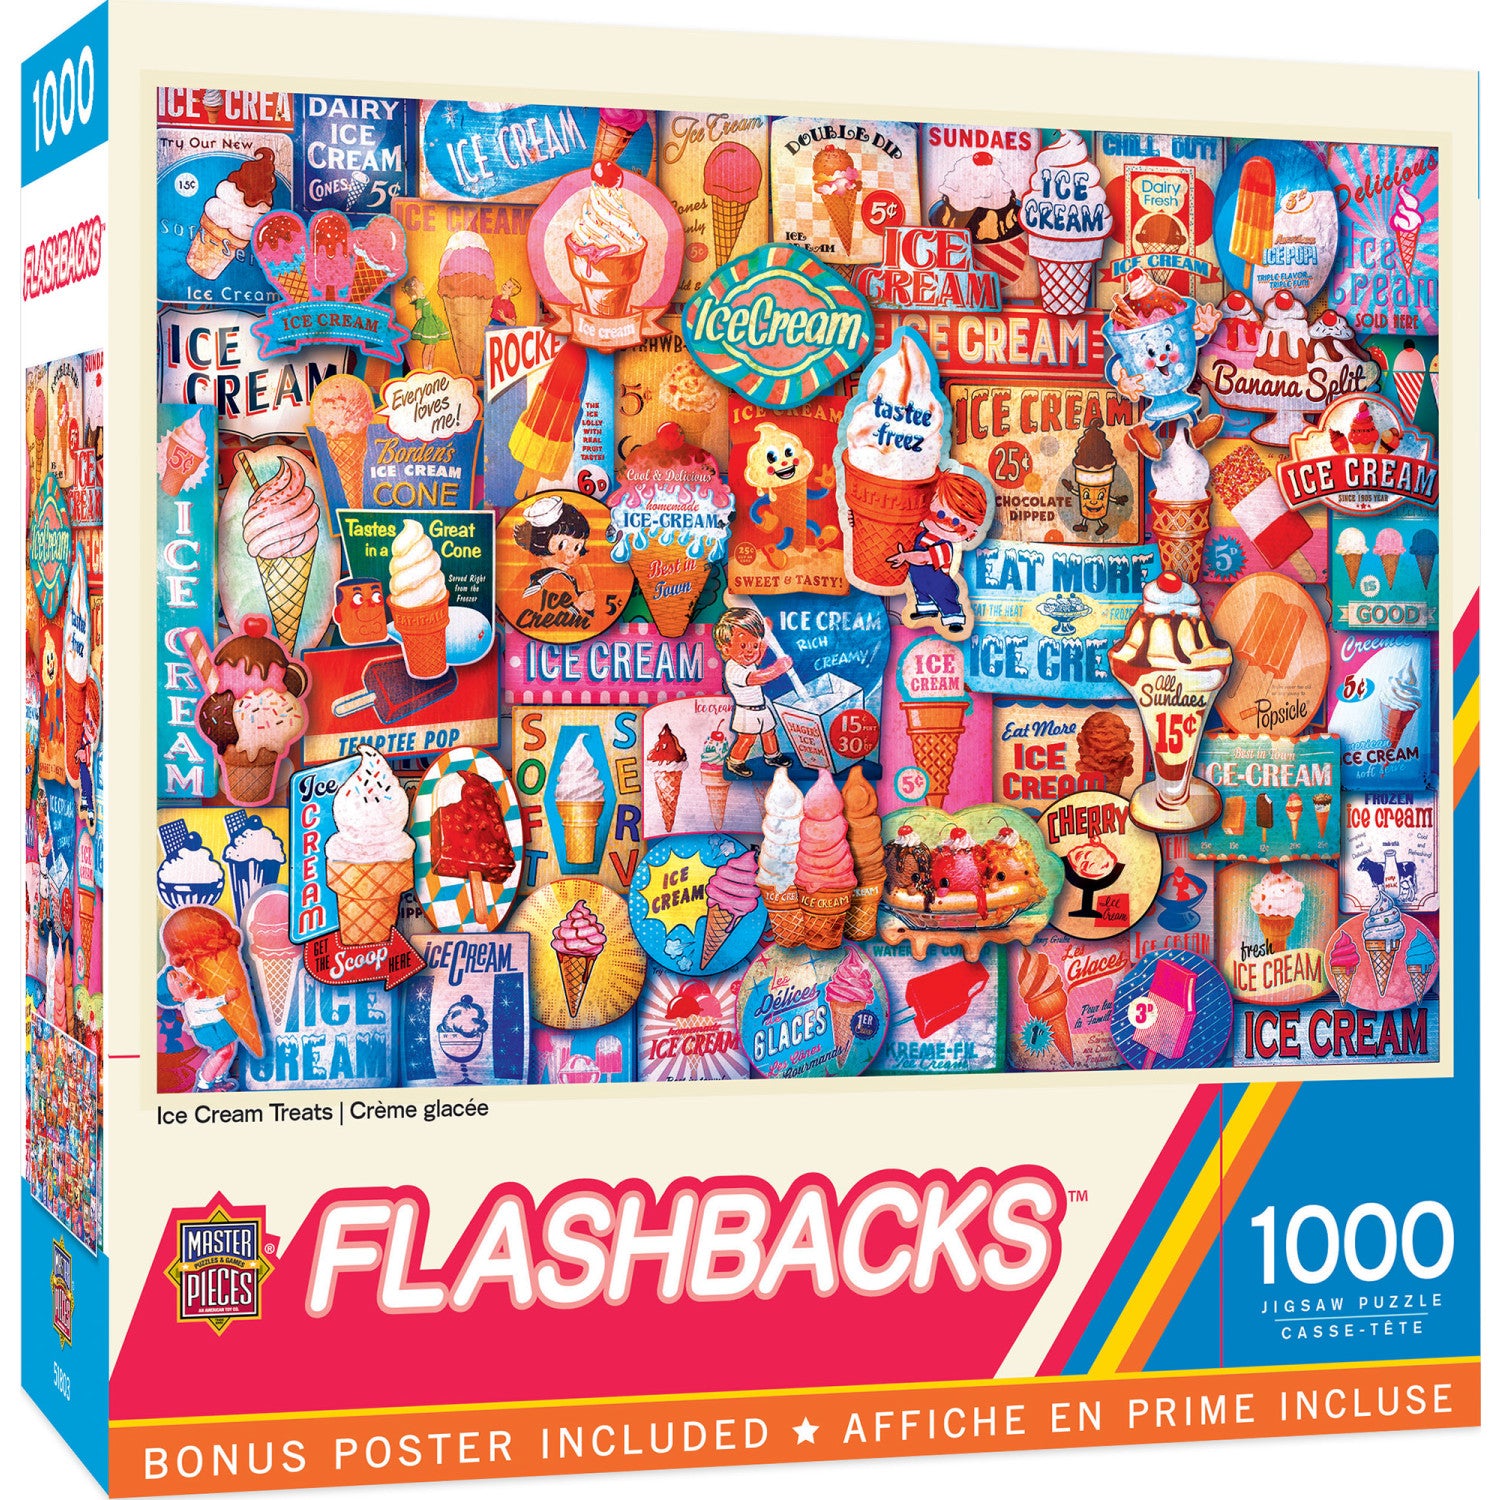 Flashbacks - Ice Cream Treats 1000 Piece Jigsaw Puzzle